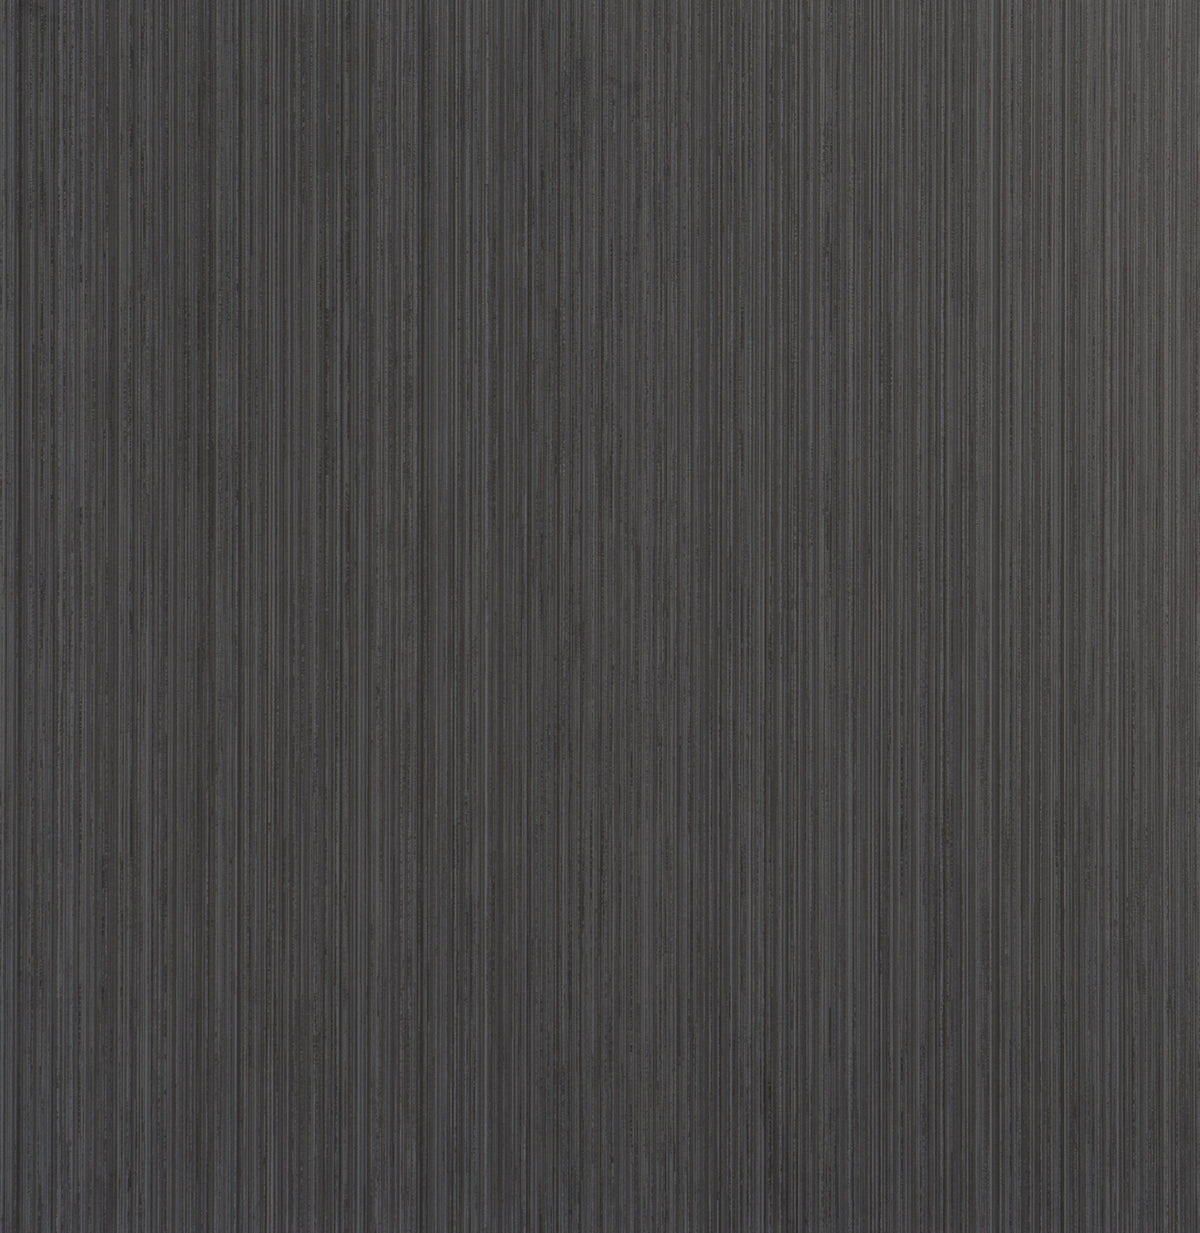 Variegated Plain Charcoal 48617 Wallpaper